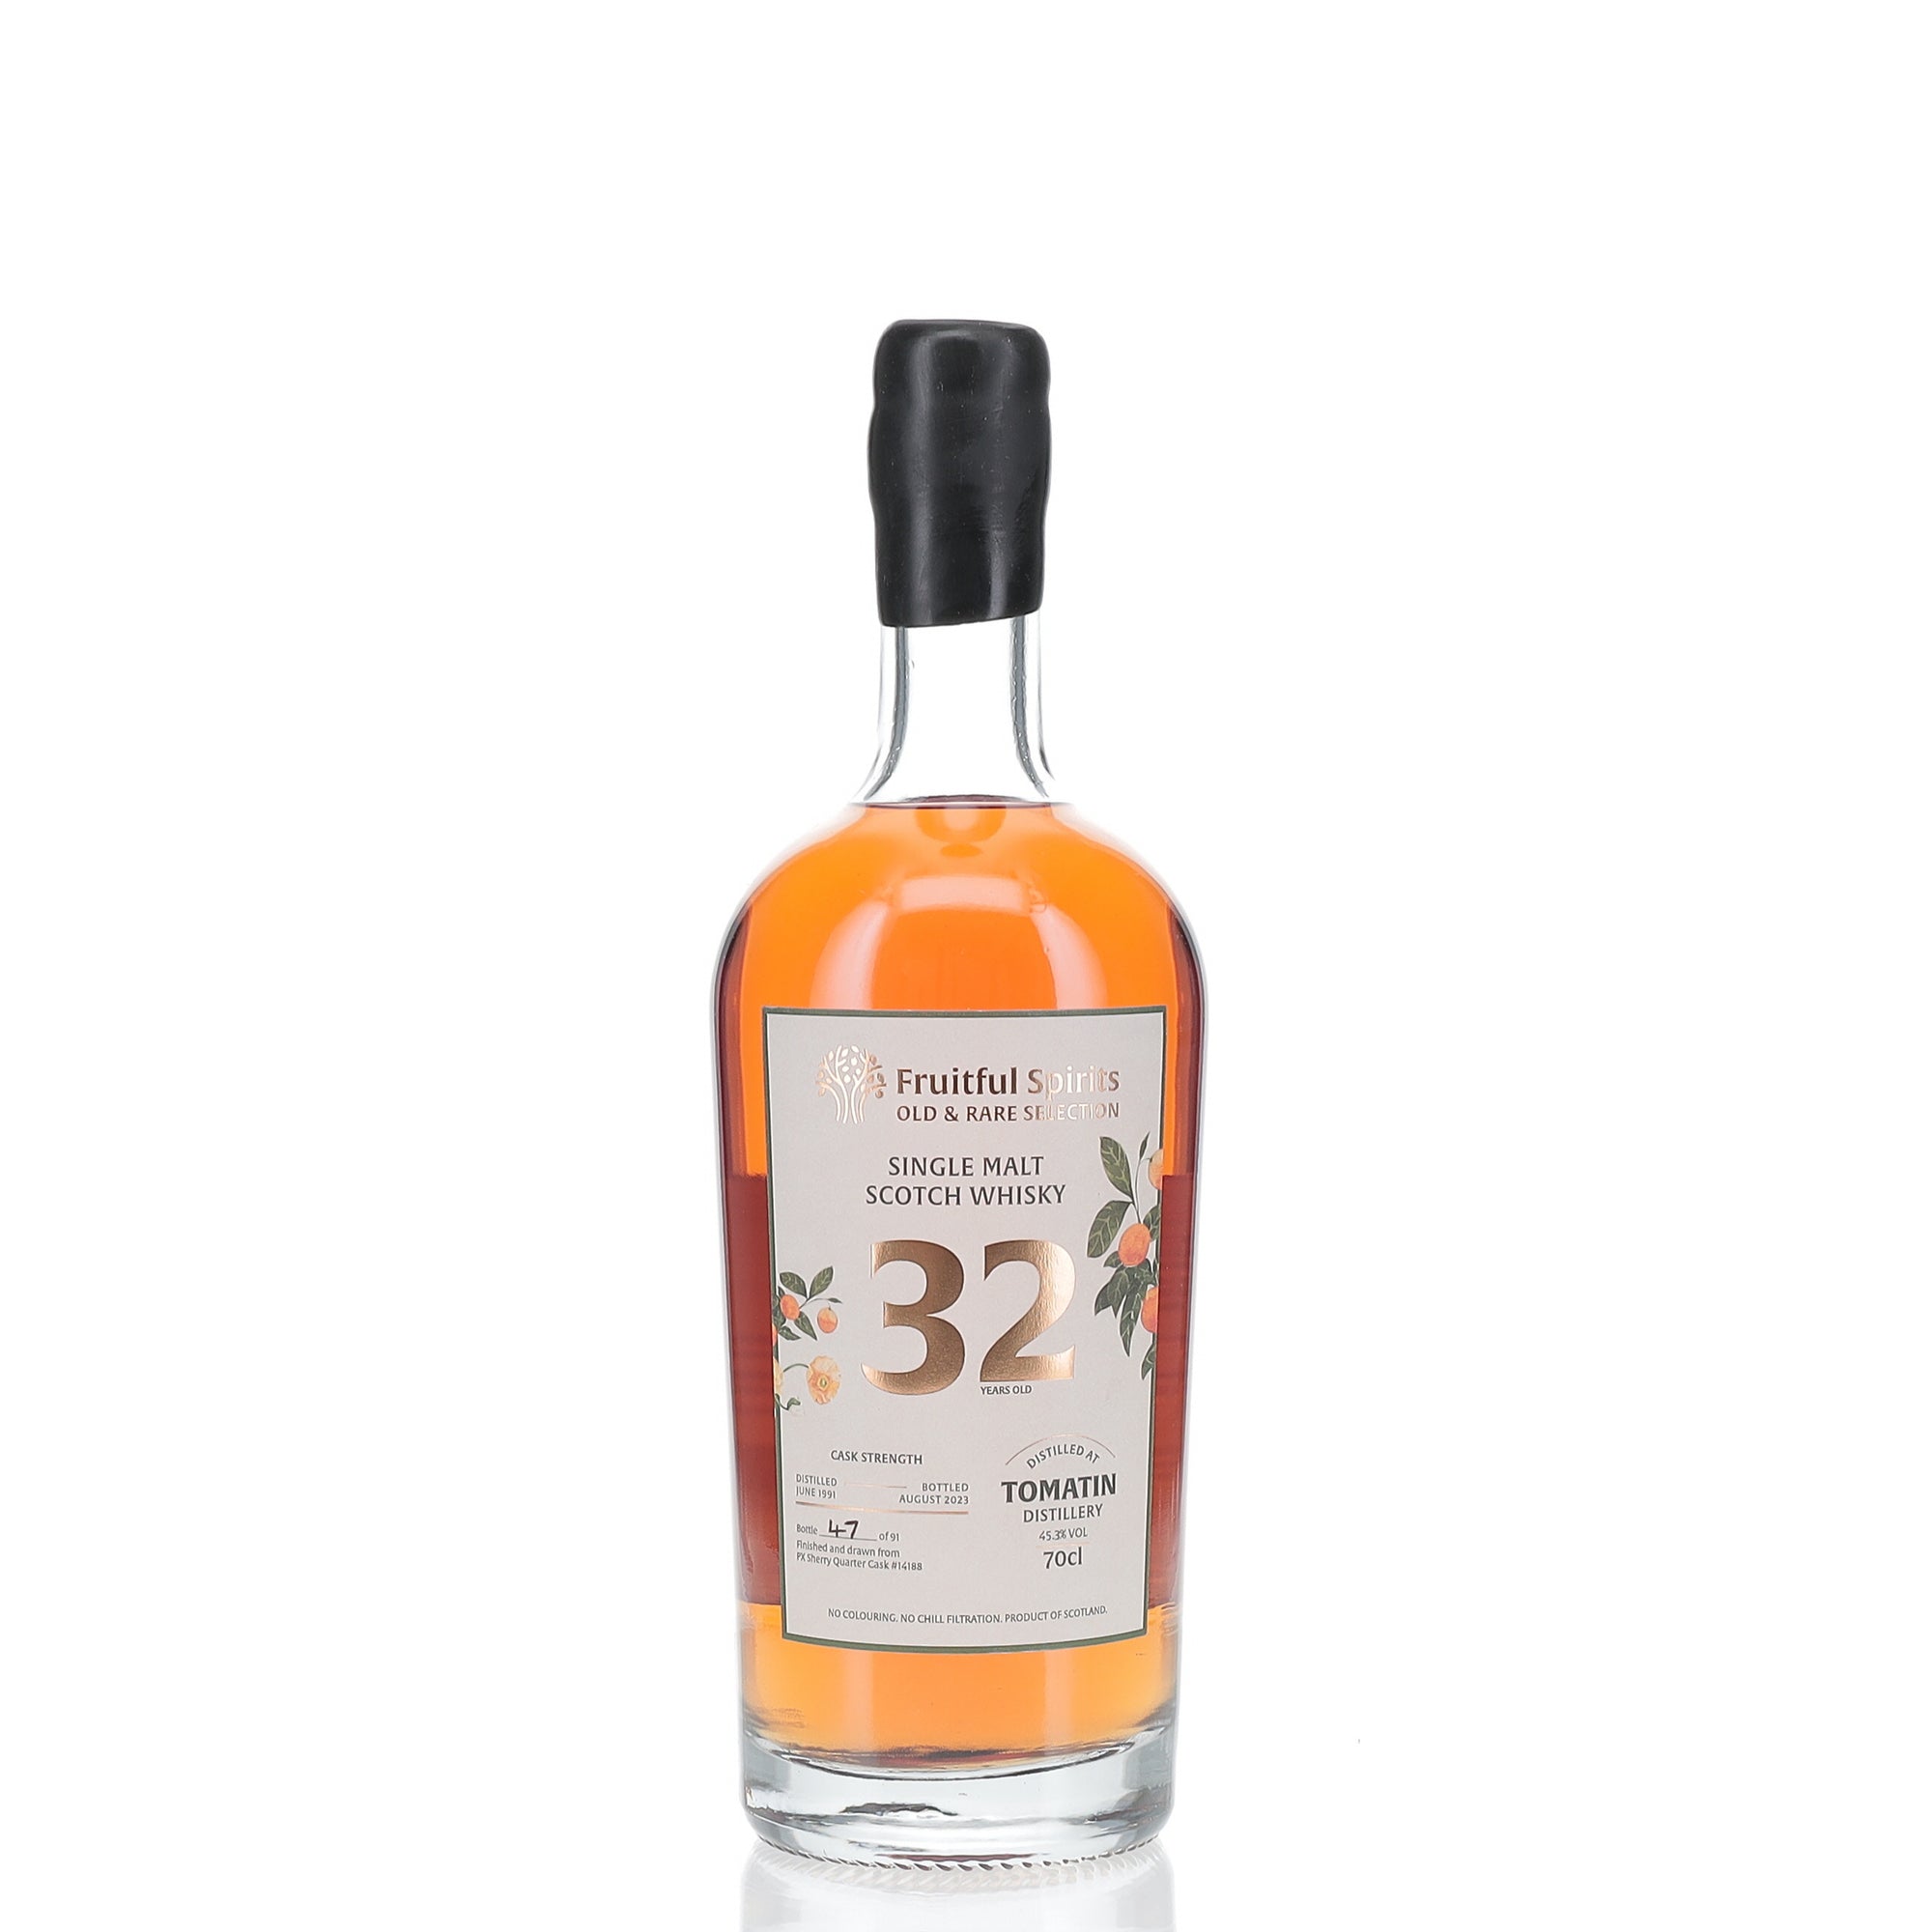 Fruitful Spirits 32 yr old Tomatin Single Malt Scotch Whisky